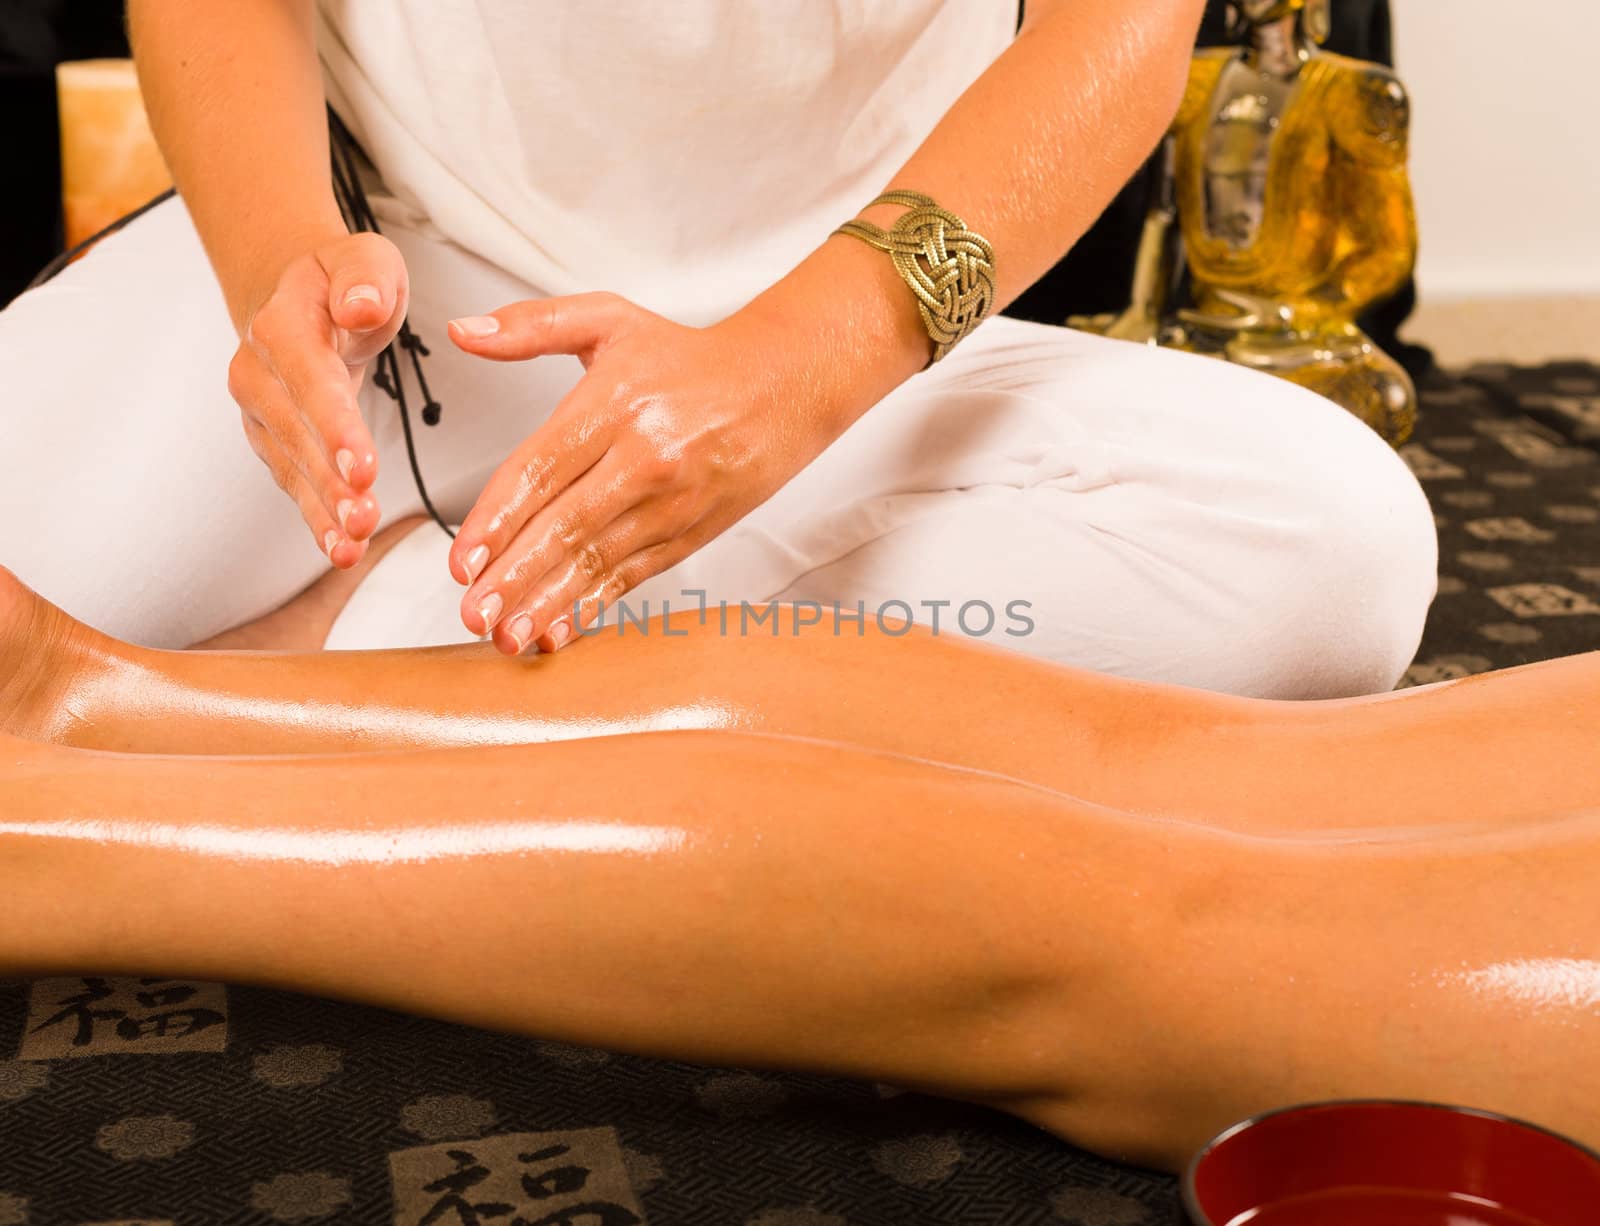 Hands massaging thighs in an oriental setting